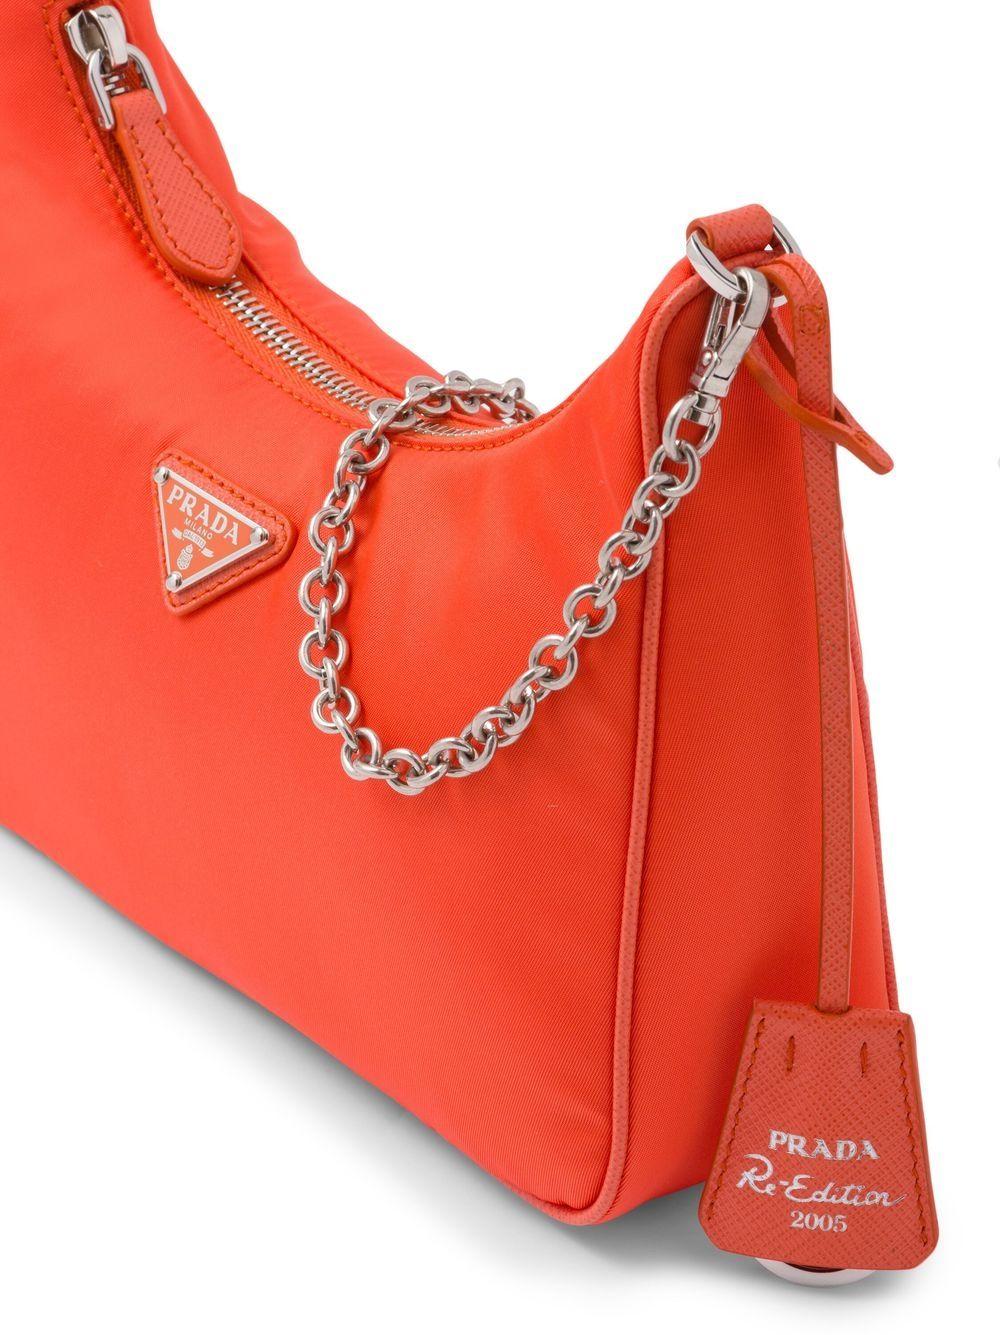 Prada Re-edition 2005 Shoulder Bag in Red | Lyst